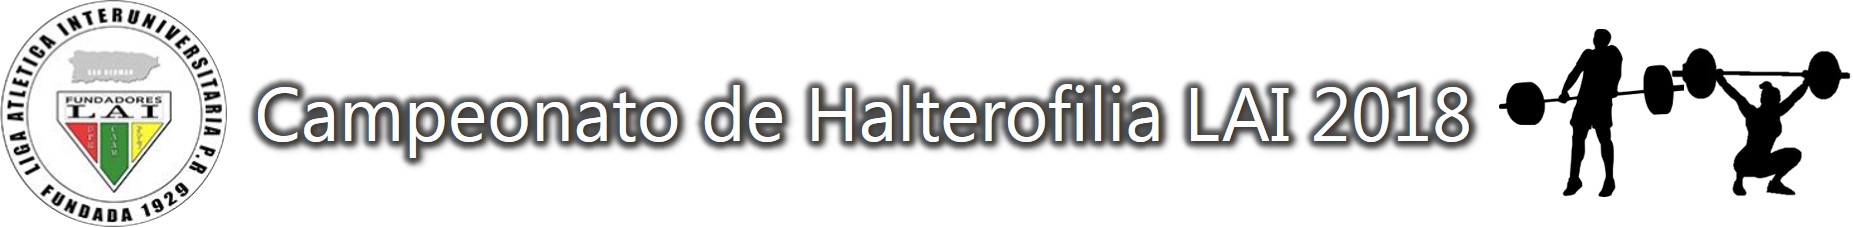 Imagen representativa al Campeonato de Halterofilia LAI 2018